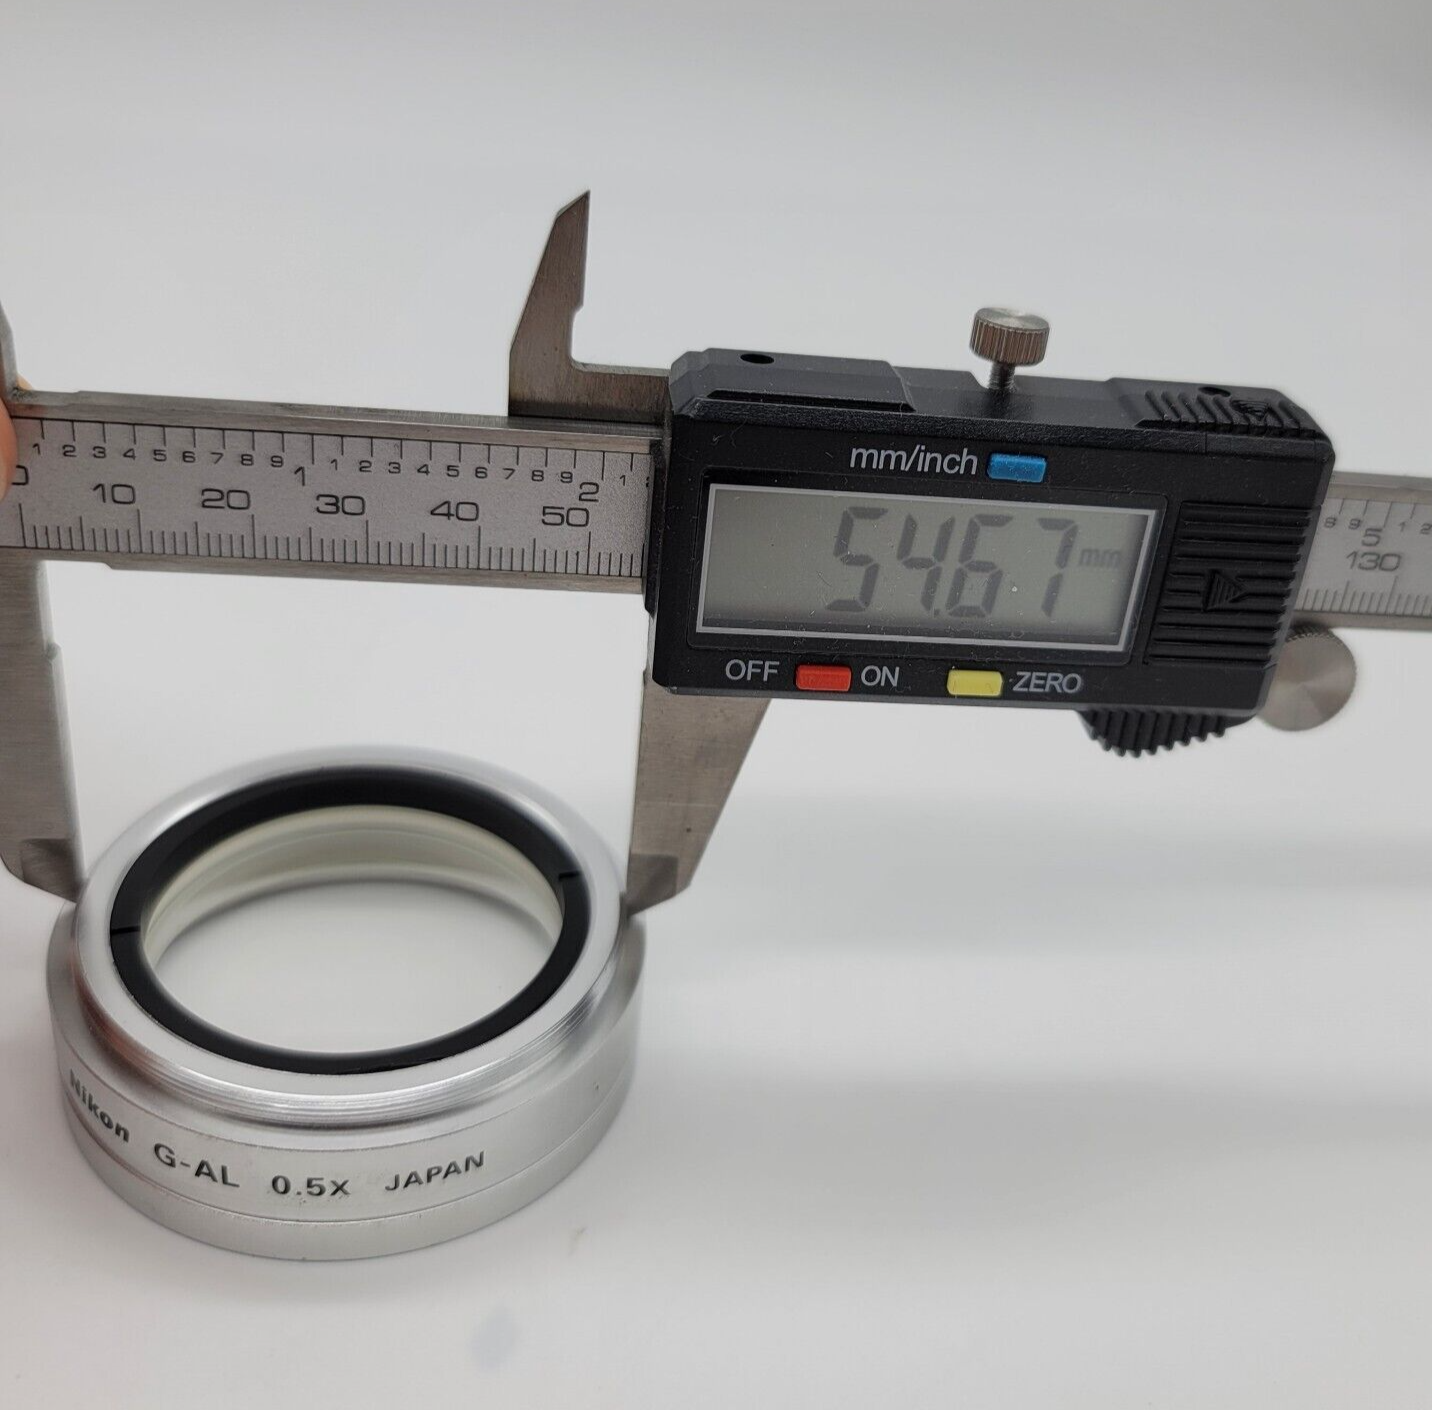 Nikon Microscope G-AL 0.5X auxiliary Objective Lens - microscopemarketplace